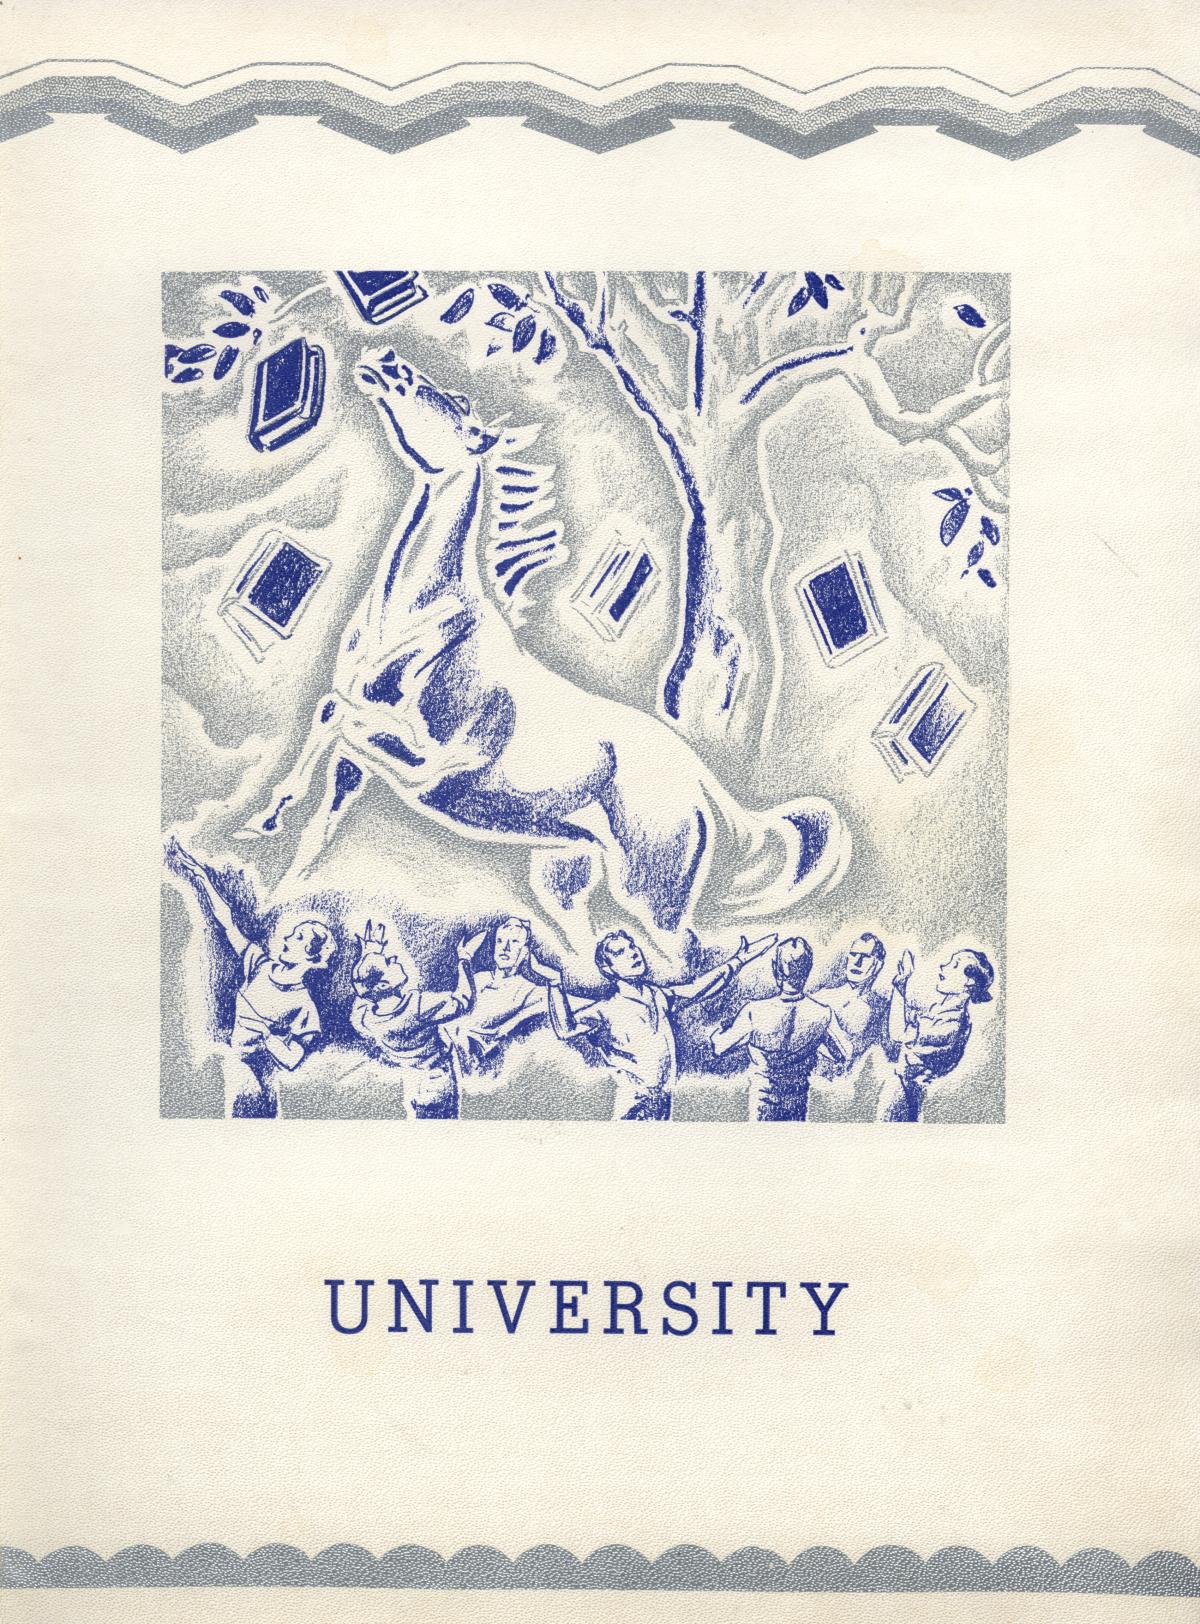 The Bronco, Yearbook of Hardin-Simmons University, 1935
                                                
                                                    None
                                                